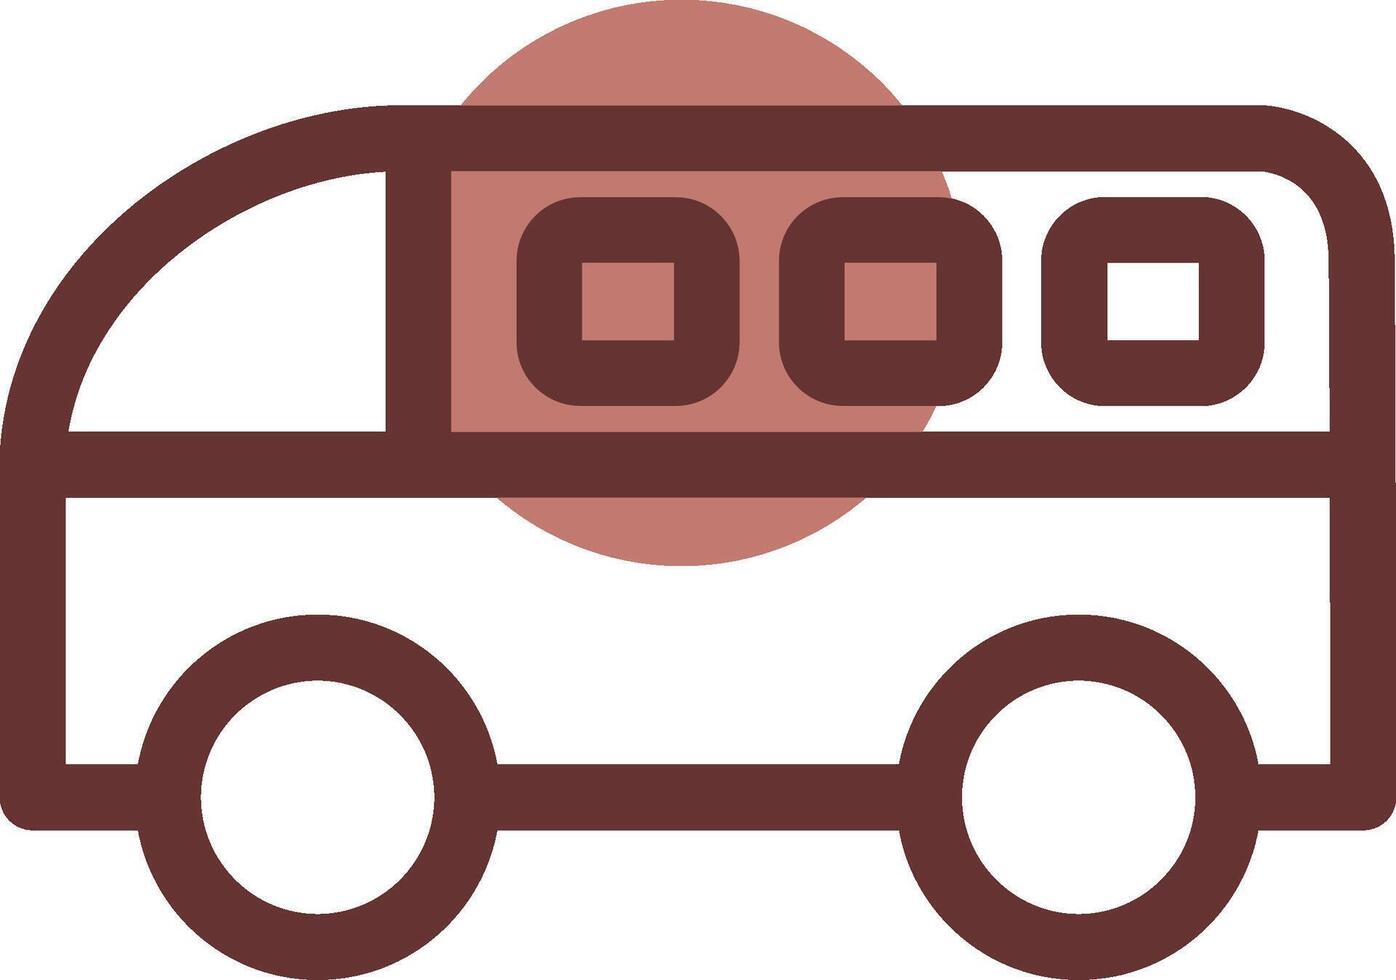 Minivan Creative Icon Design vector